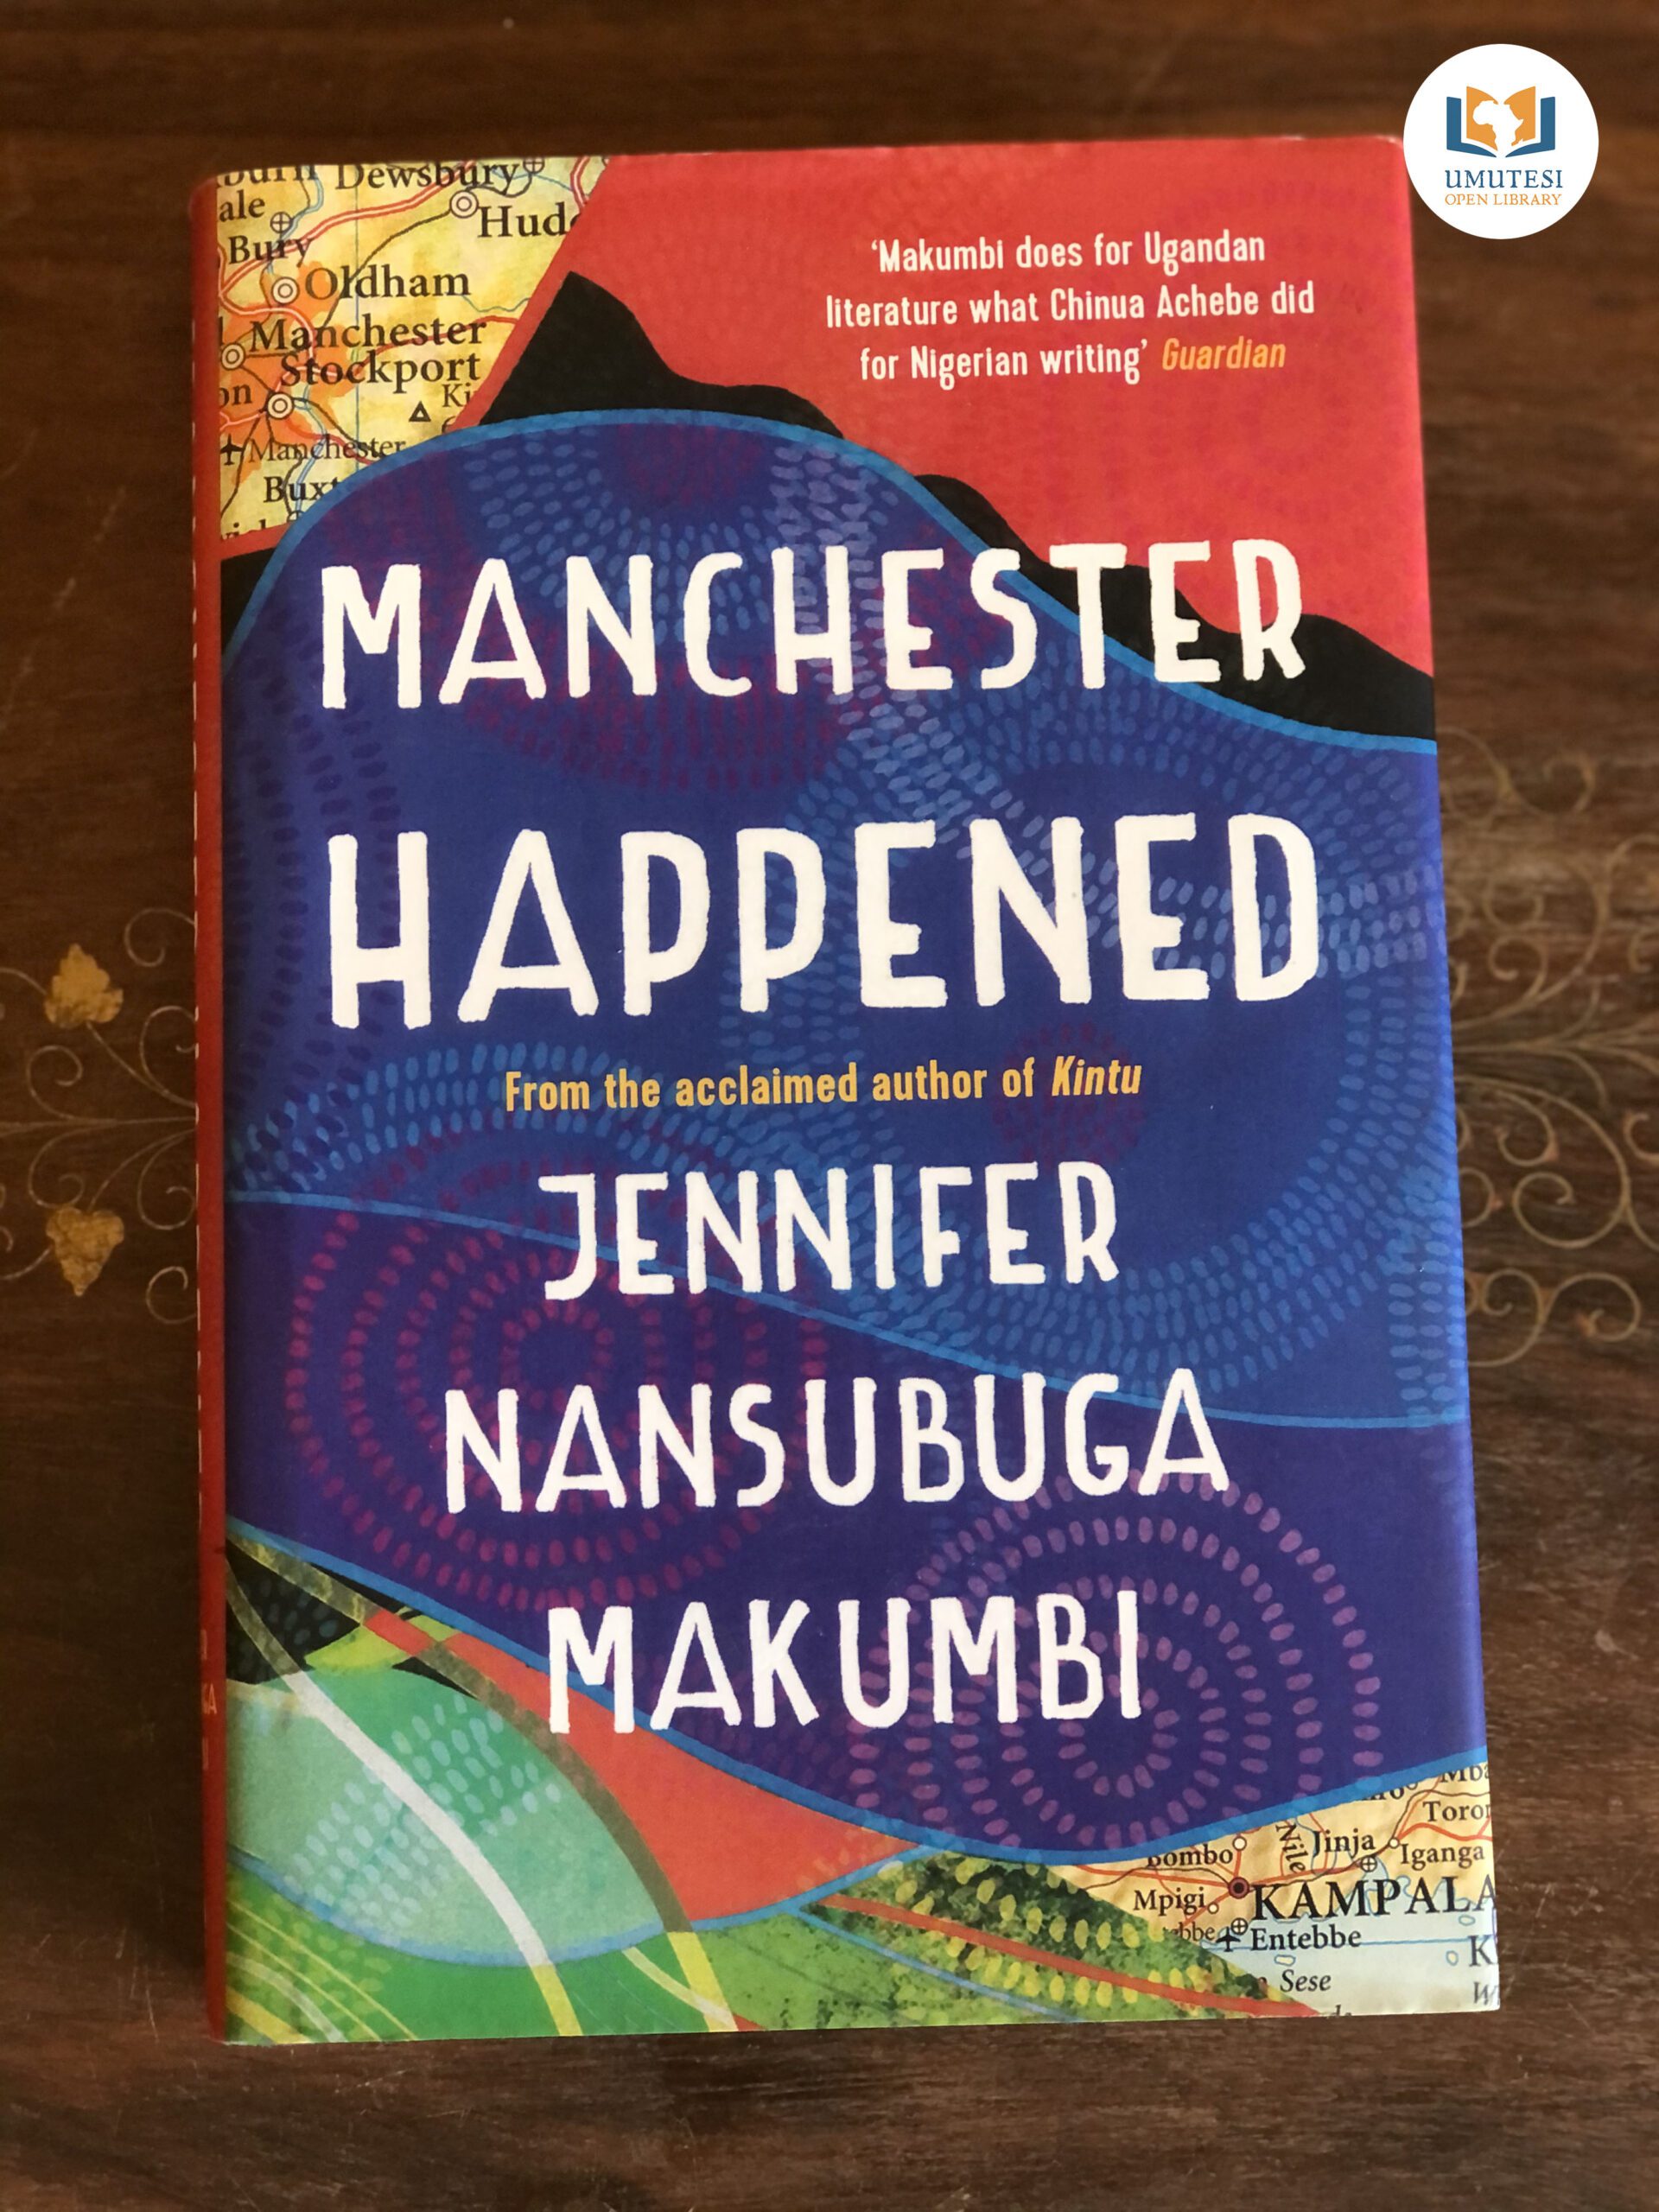 Manchester Happened by Jennifer Nsubuga Makumbi